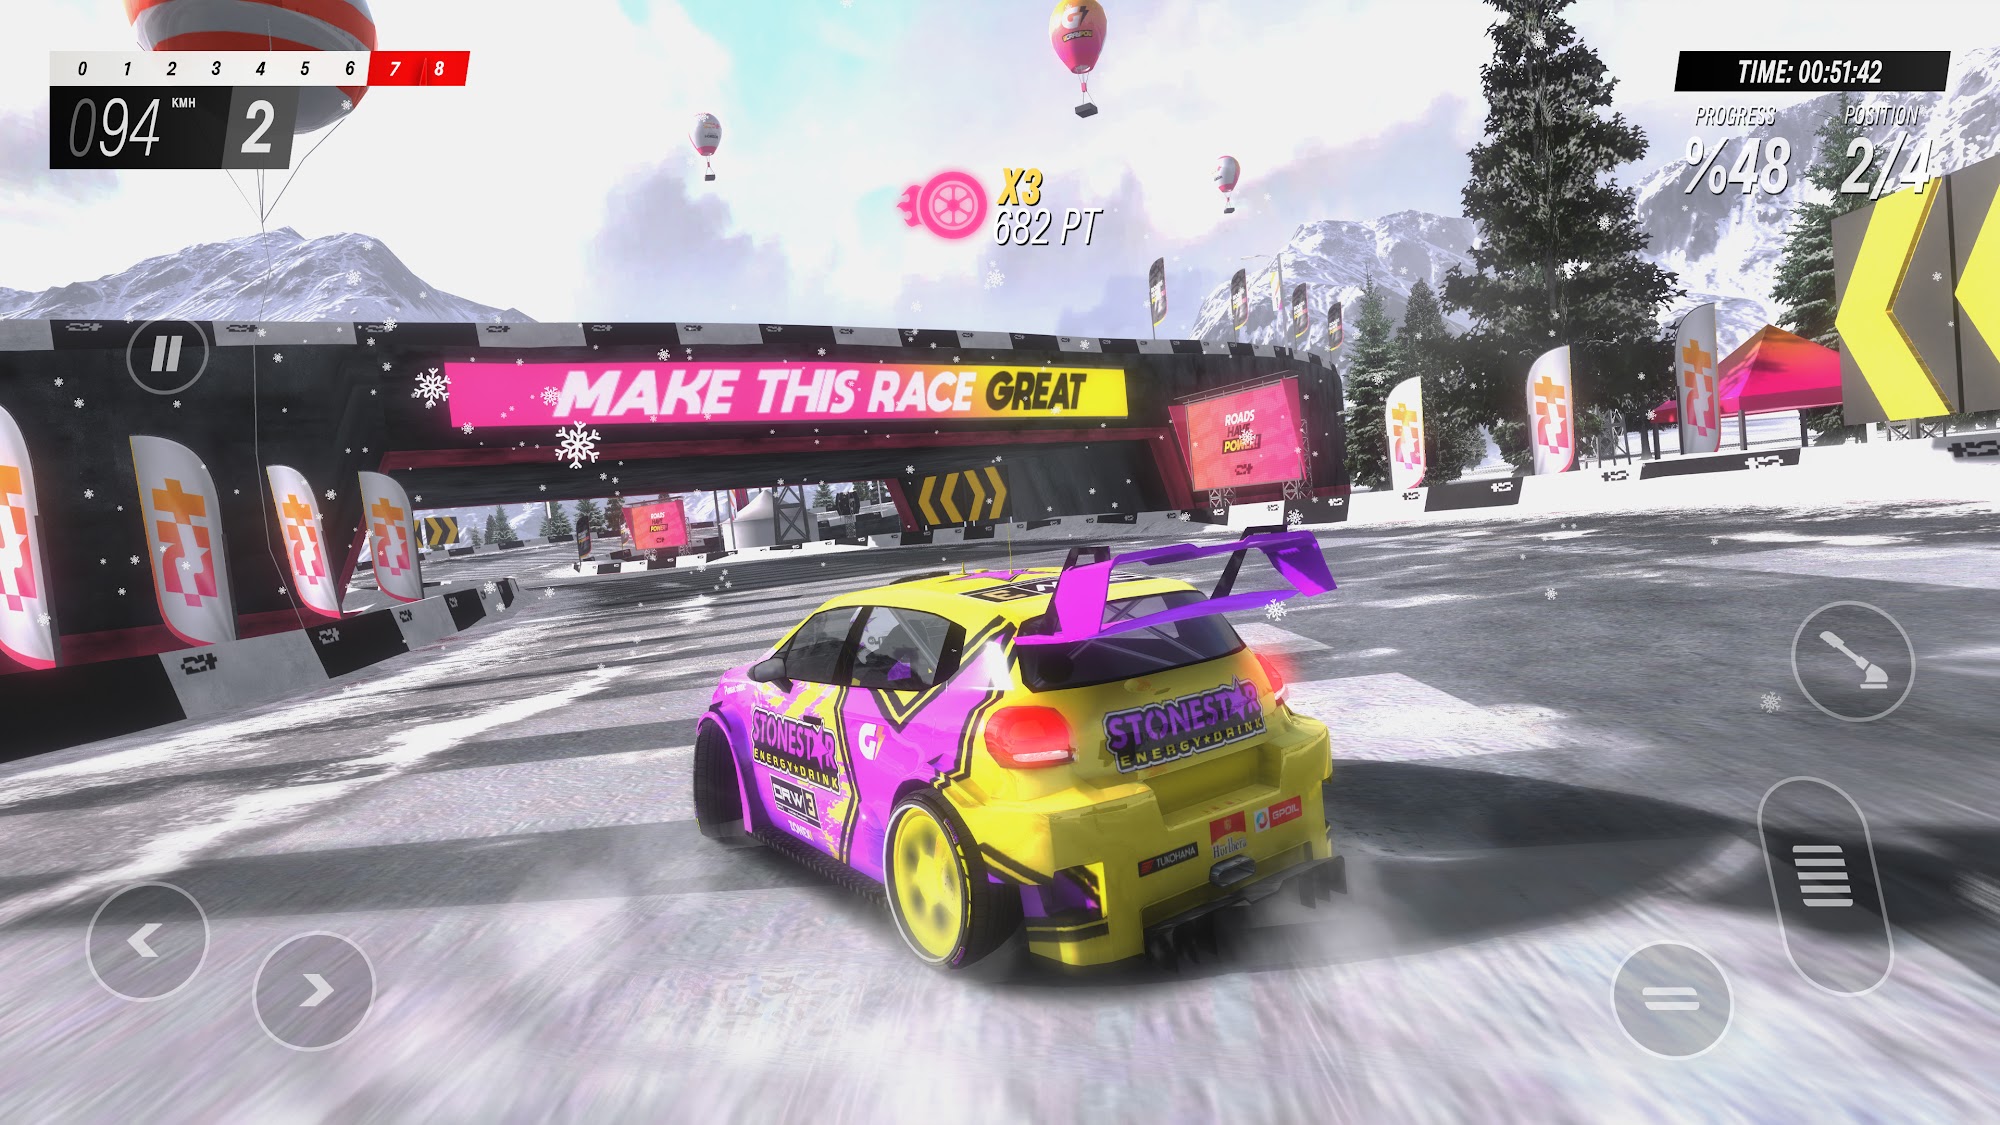 Rally Horizon - Android game screenshots.